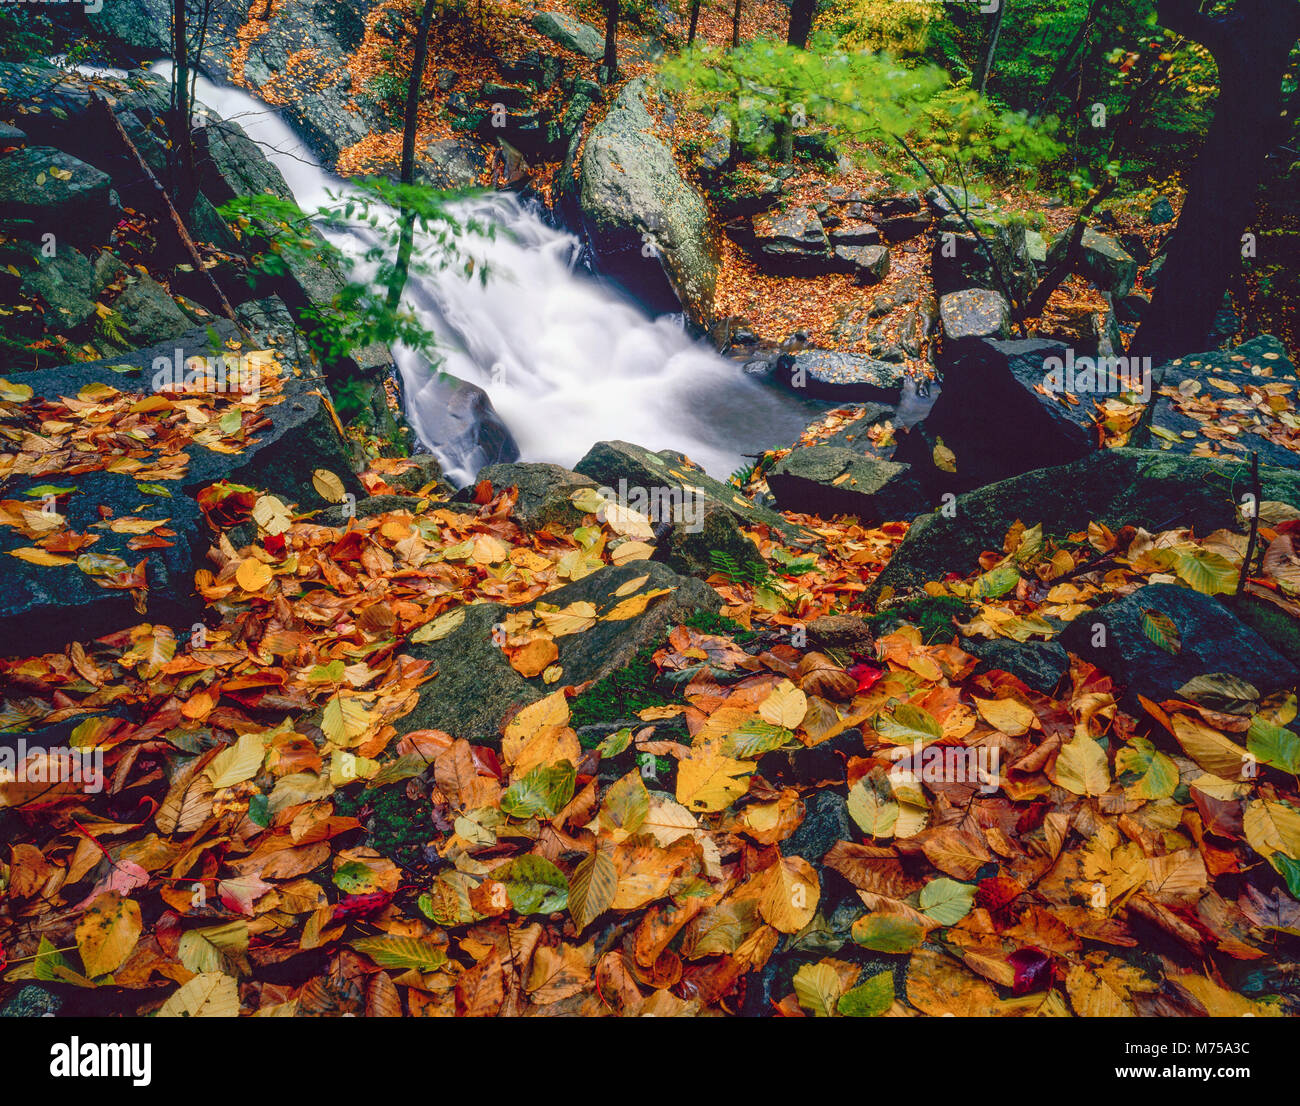 Electric Brook Falls, Schooleys Mountain Park, Morris County, Nuova Jerssey Foto Stock